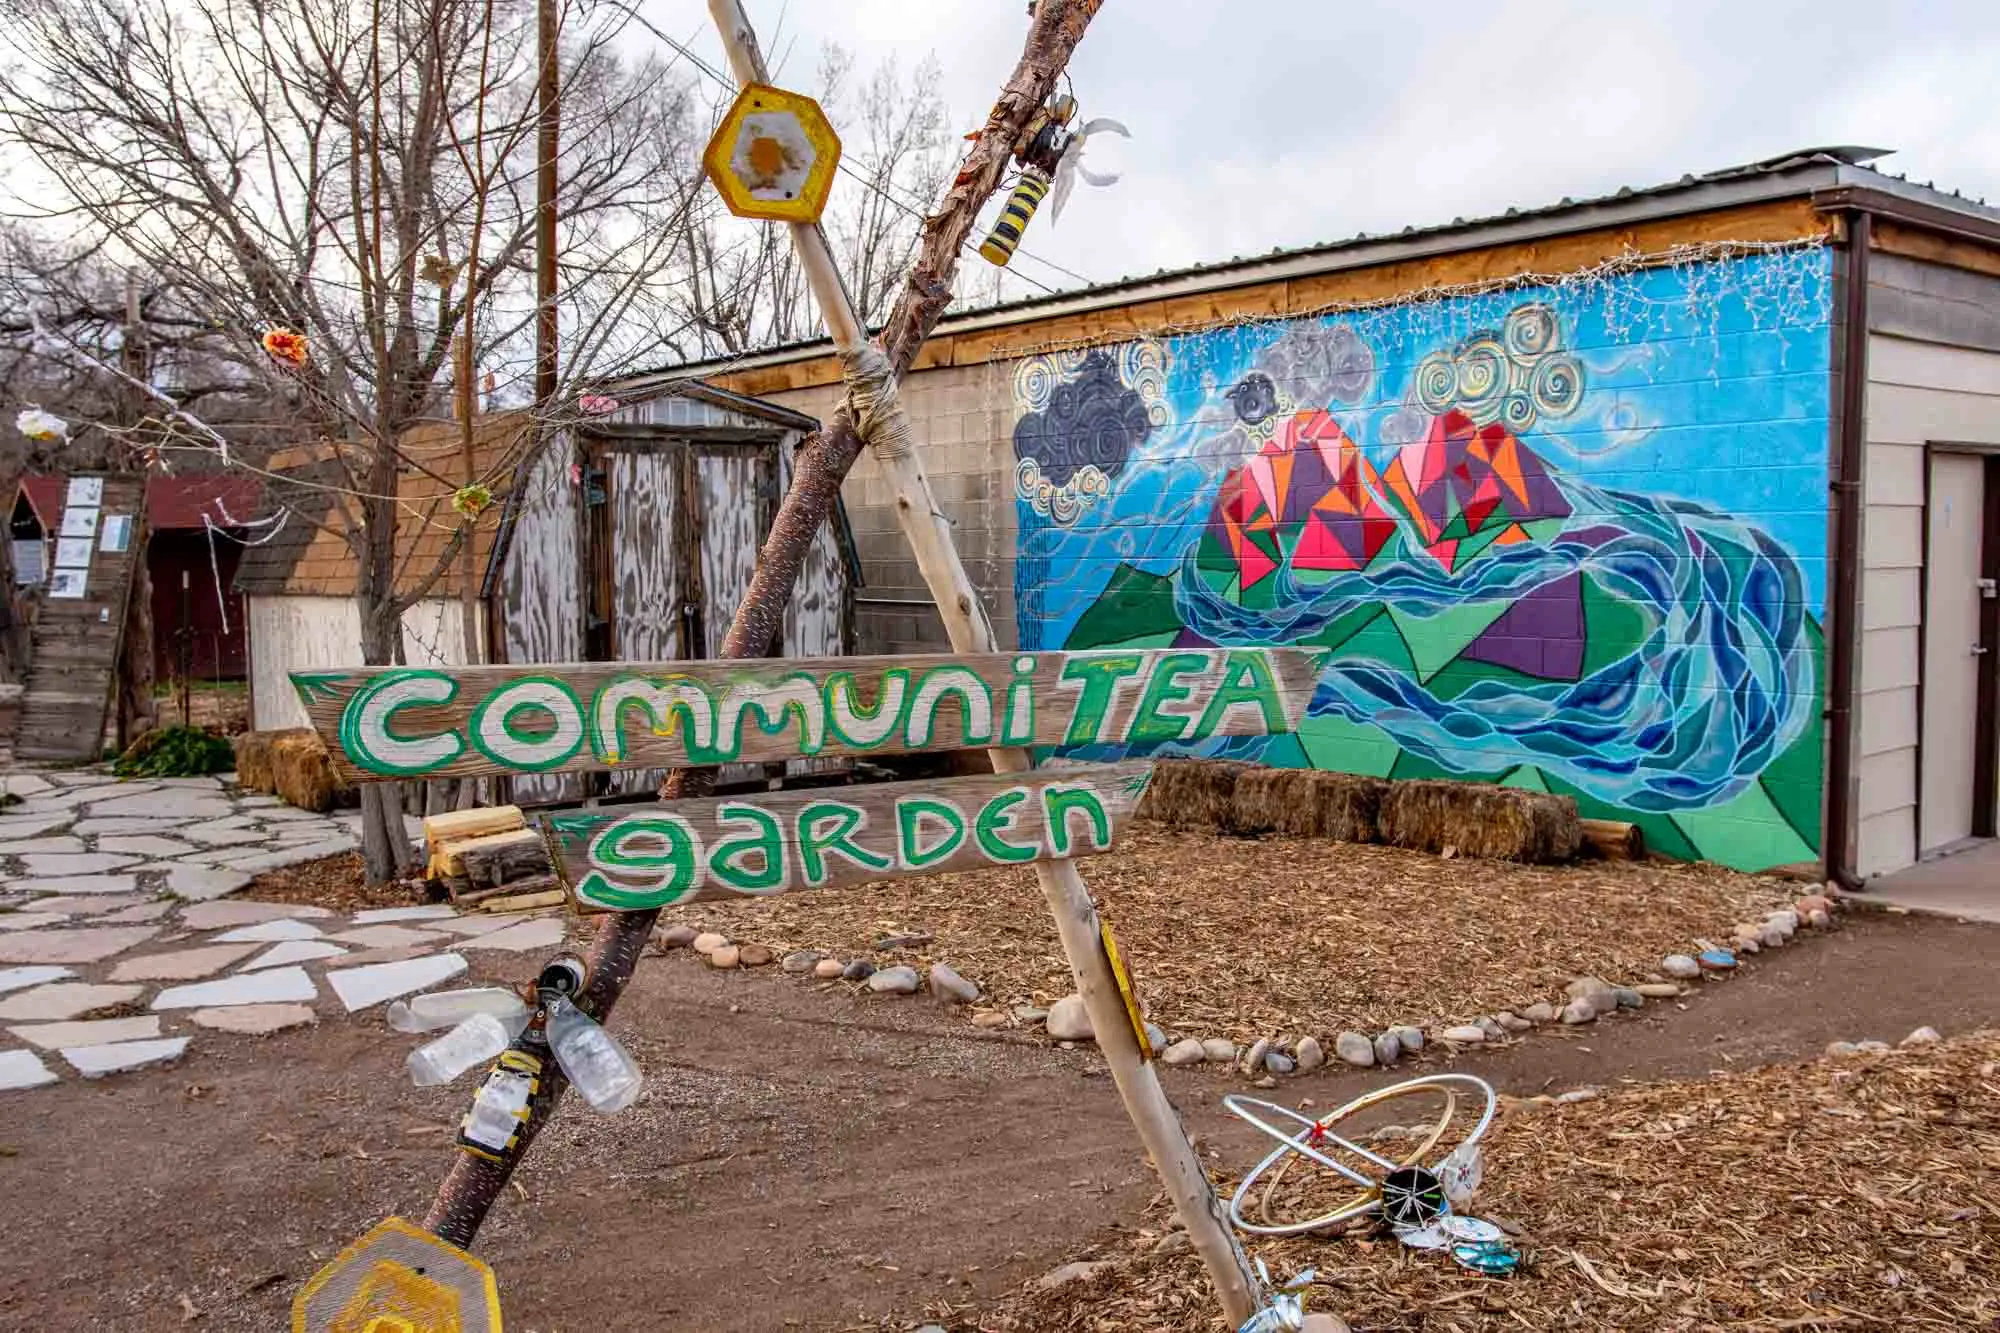 Mural and sign reading "CommuniTEA Garden"